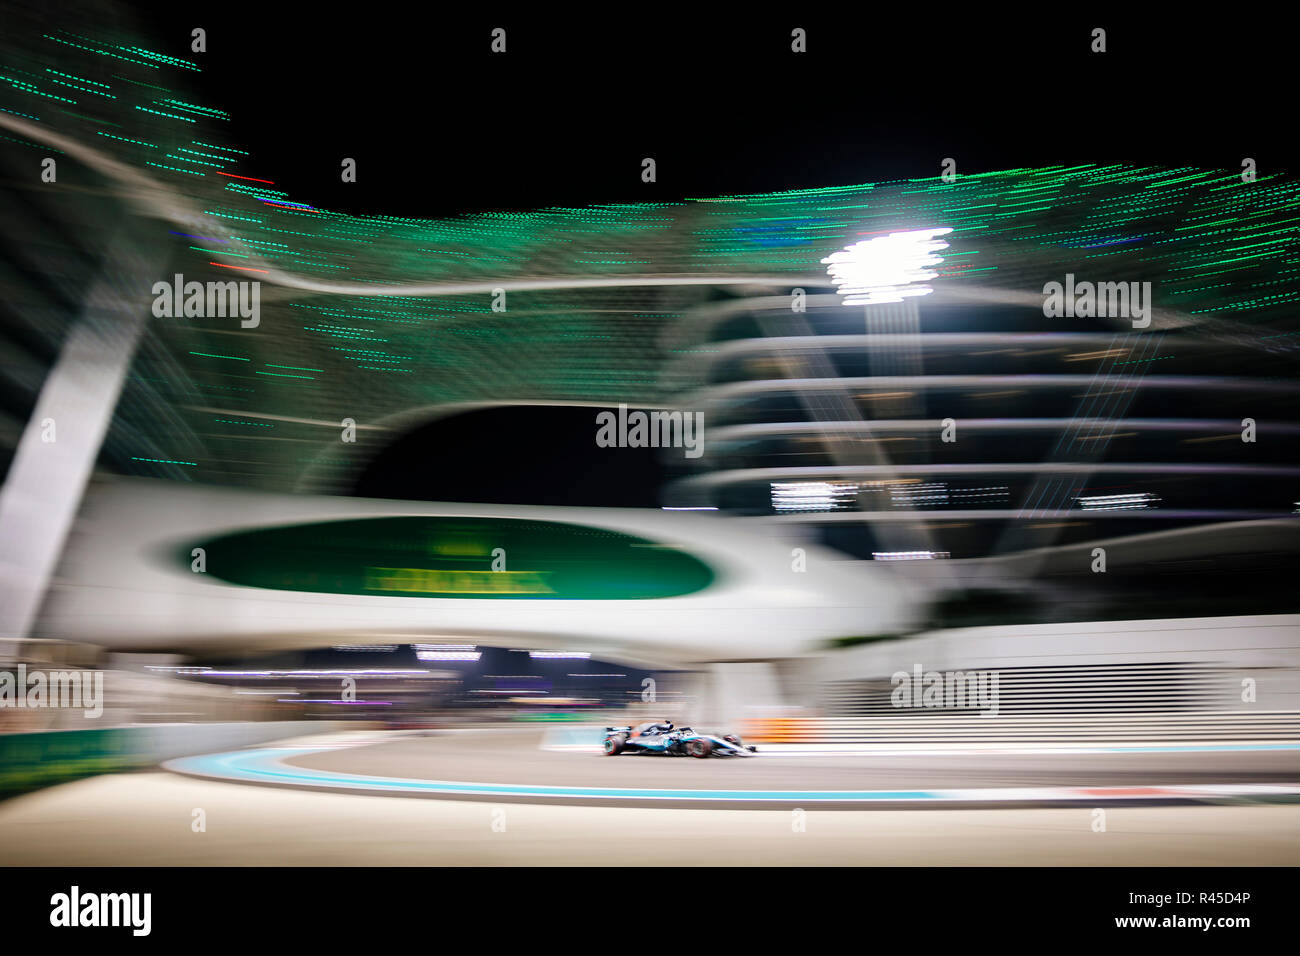 Abu Dhabi, VAE. 25 Nov, 2018. Mercedes AMG PETRONAS-F1-Teams British Pilot Lewis Hamilton konkurriert während des Formel 1 Grand Prix von Abu Dhabi auf dem Yas Marina Circuit in Abu Dhabi am 25. November 2018. Credit: Jure Makovec/Alamy leben Nachrichten Stockfoto